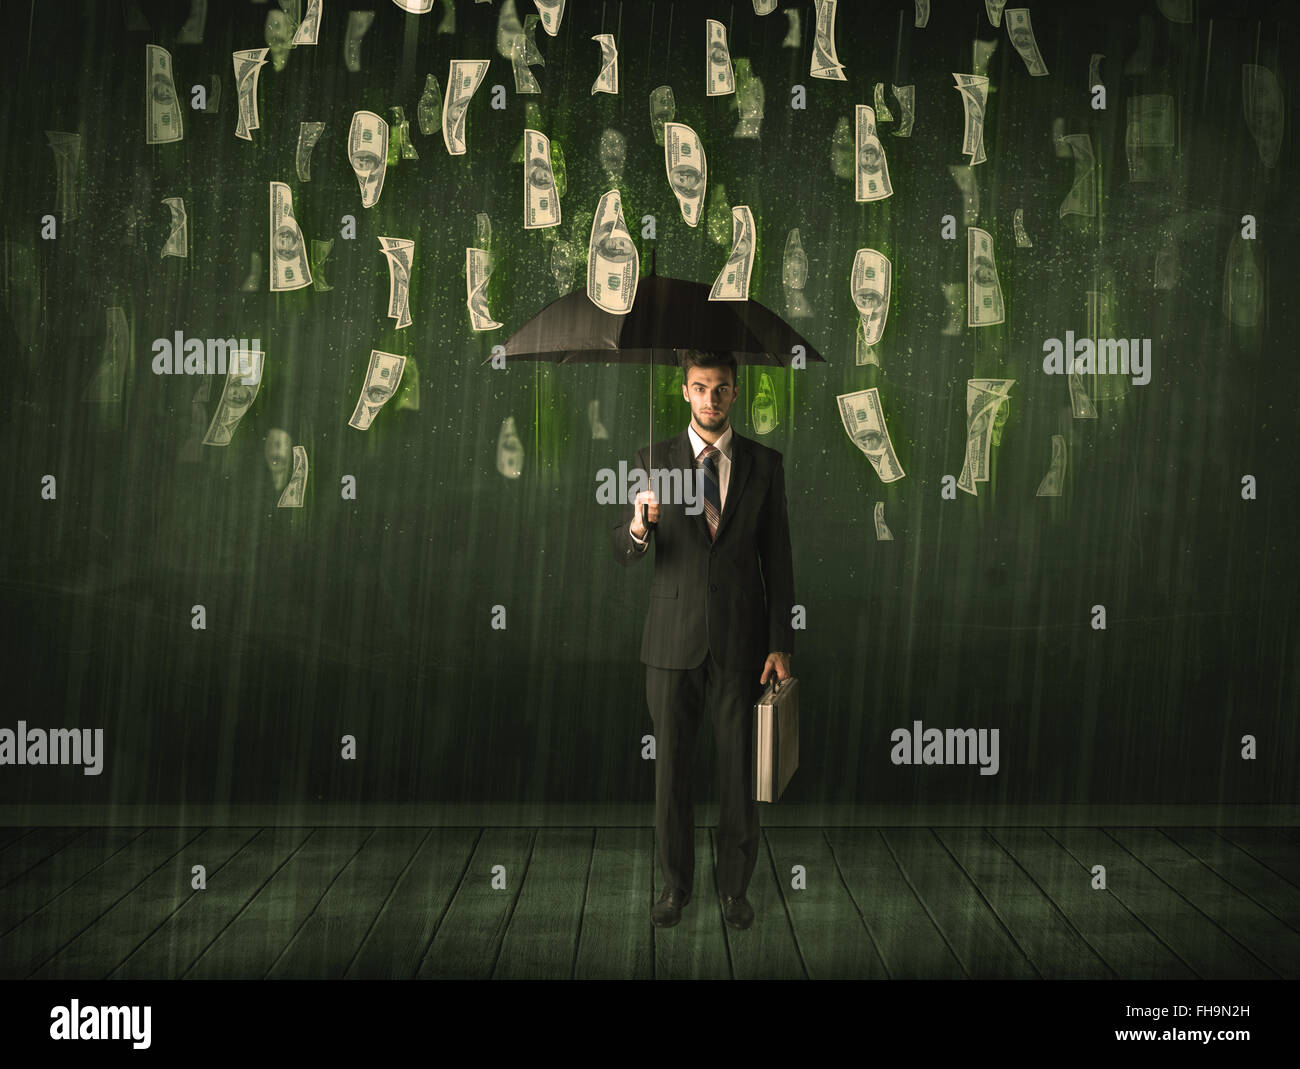 Businessman standing with umbrella in dollar bill rain concept Stock Photo